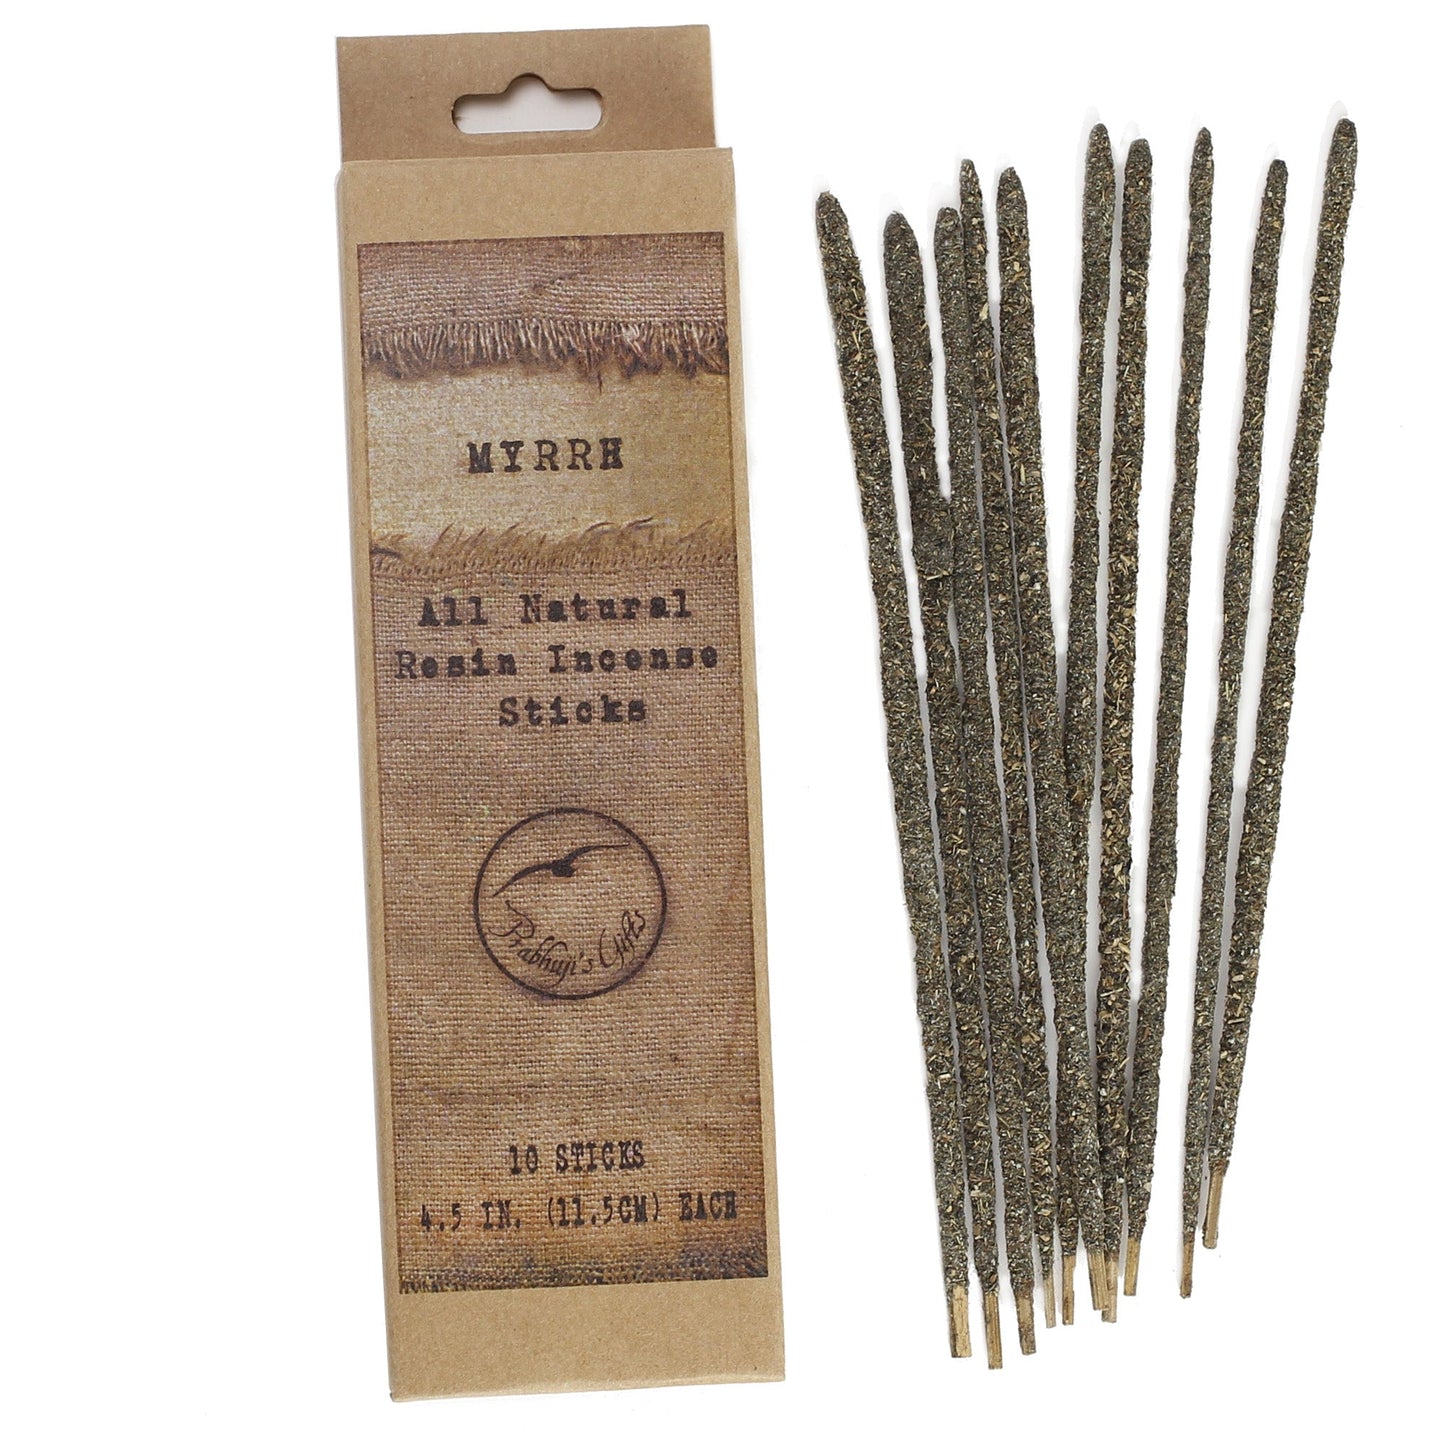 Smudging Incense - Myrrh - Natural Resin Incense sticks - Tree Spirit Wellness